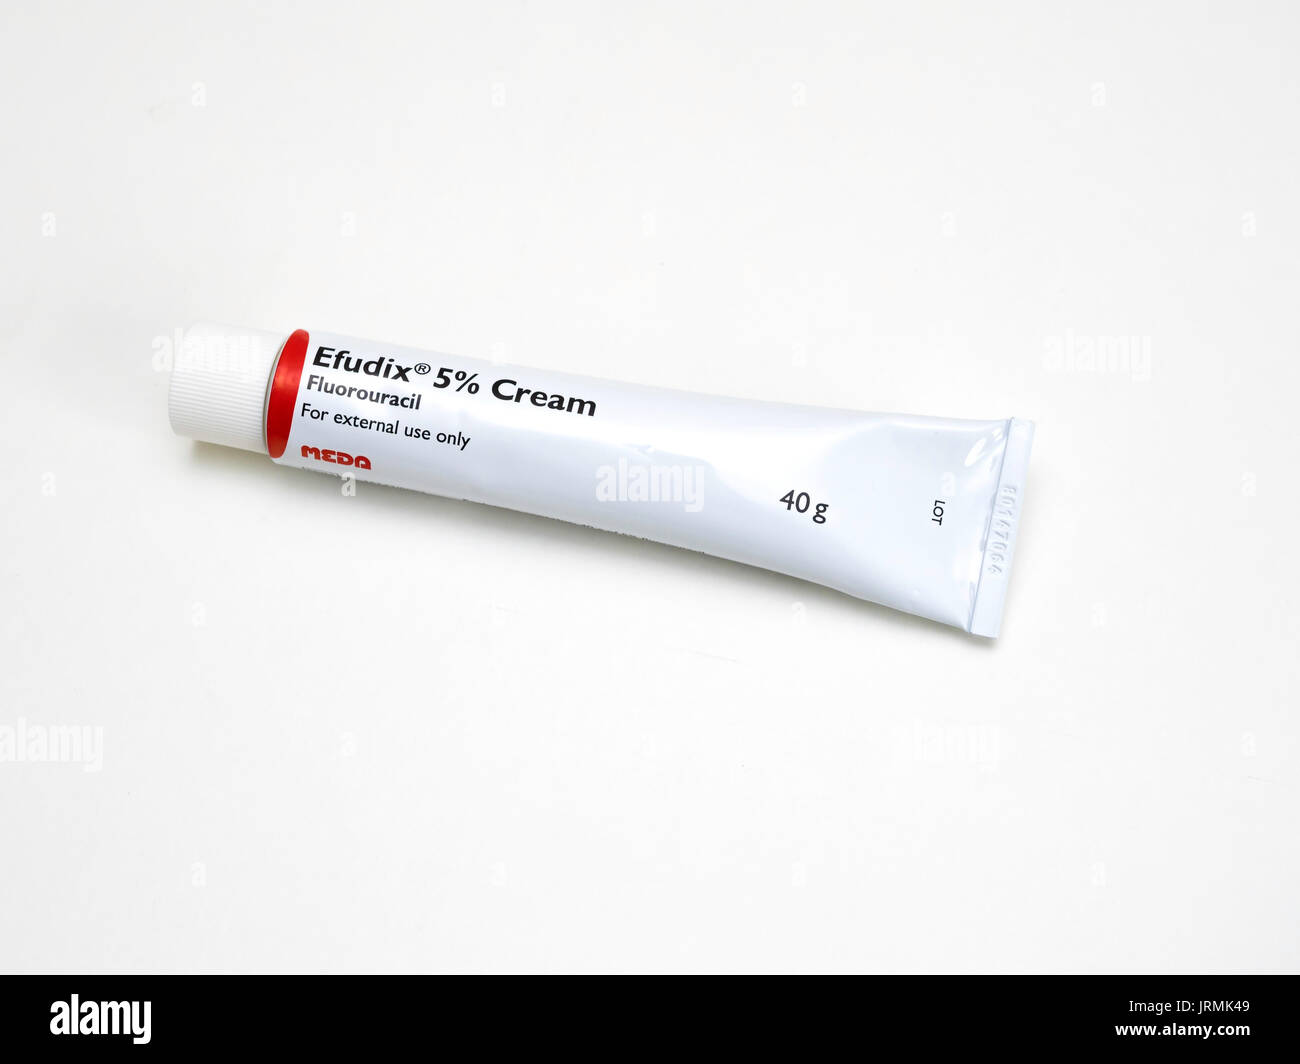 Efudex 5% Cream Fluorouracil prescription medicine ointment for treatment  of Actinic Keratoses skin damage from exposure to sunshine Stock Photo -  Alamy